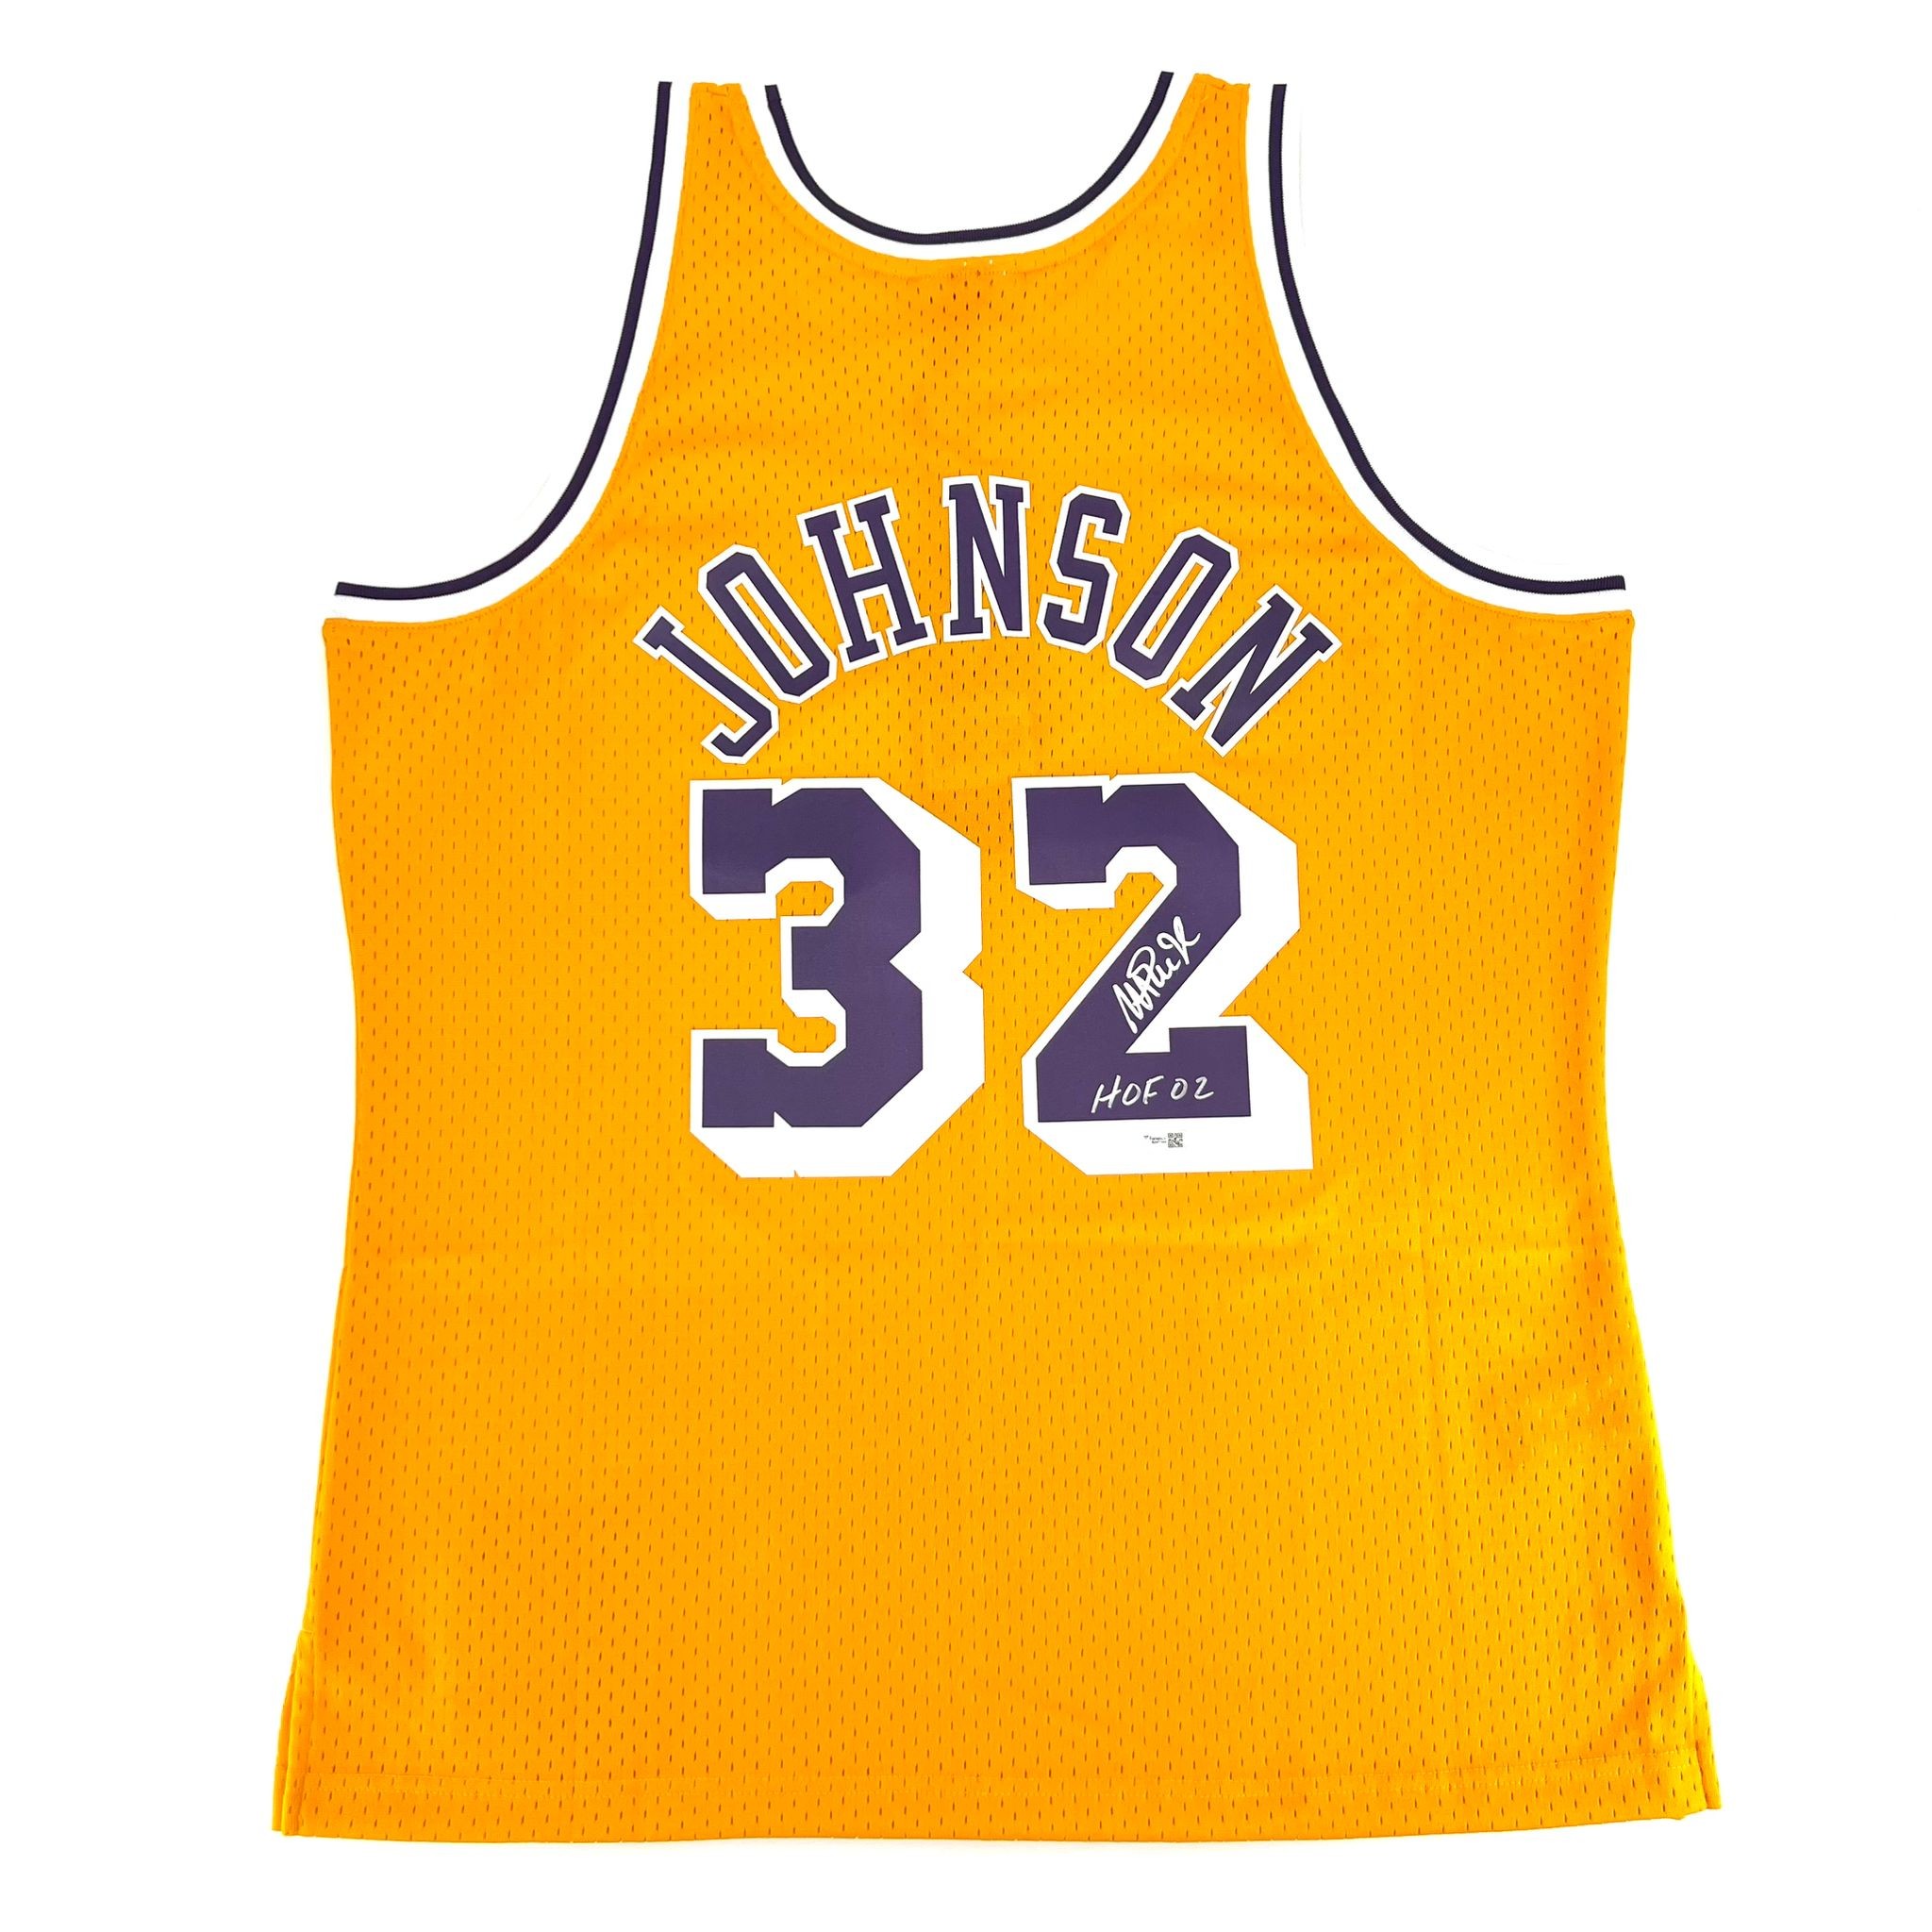 Magic Johnson Signed Los Angeles Lakers Jersey. Basketball, Lot #43121